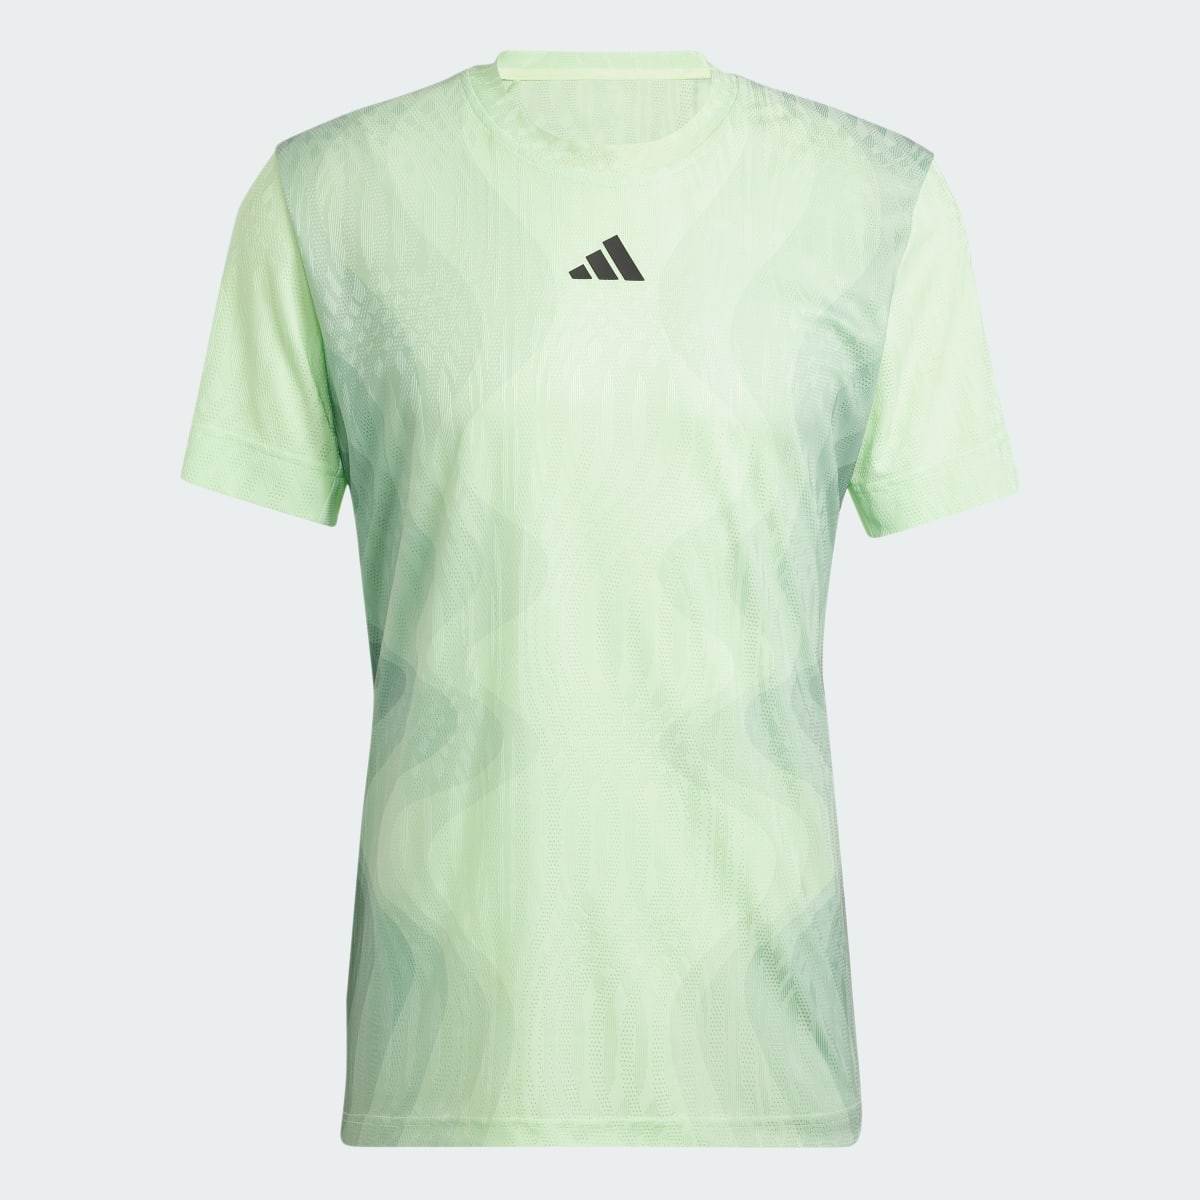 Adidas Tennis Airchill Pro FreeLift T-Shirt. 5